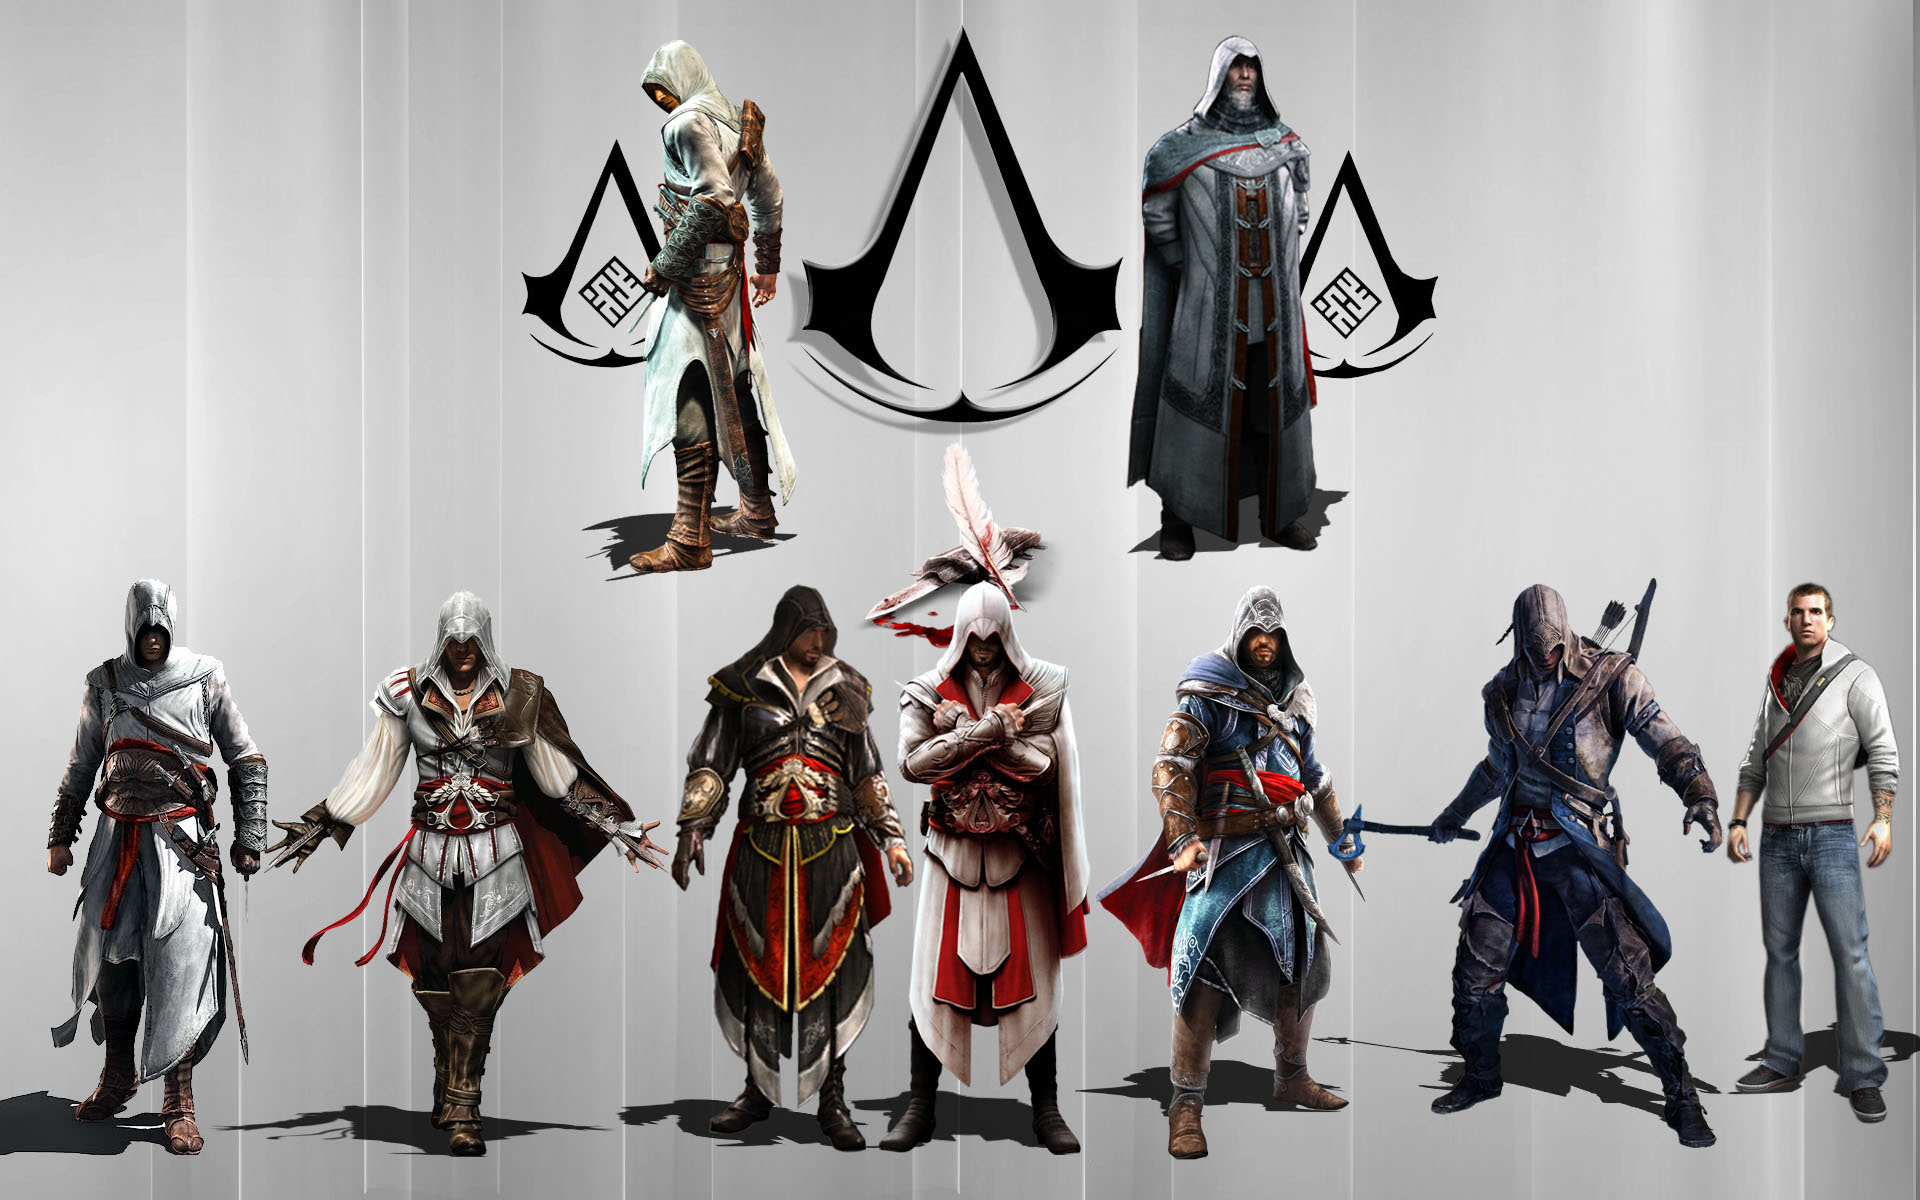 Altair Assassins Creed Ezio Assassins Creed Connor Assassins Creed Assassins Creed Desmond Miles 1920x1200